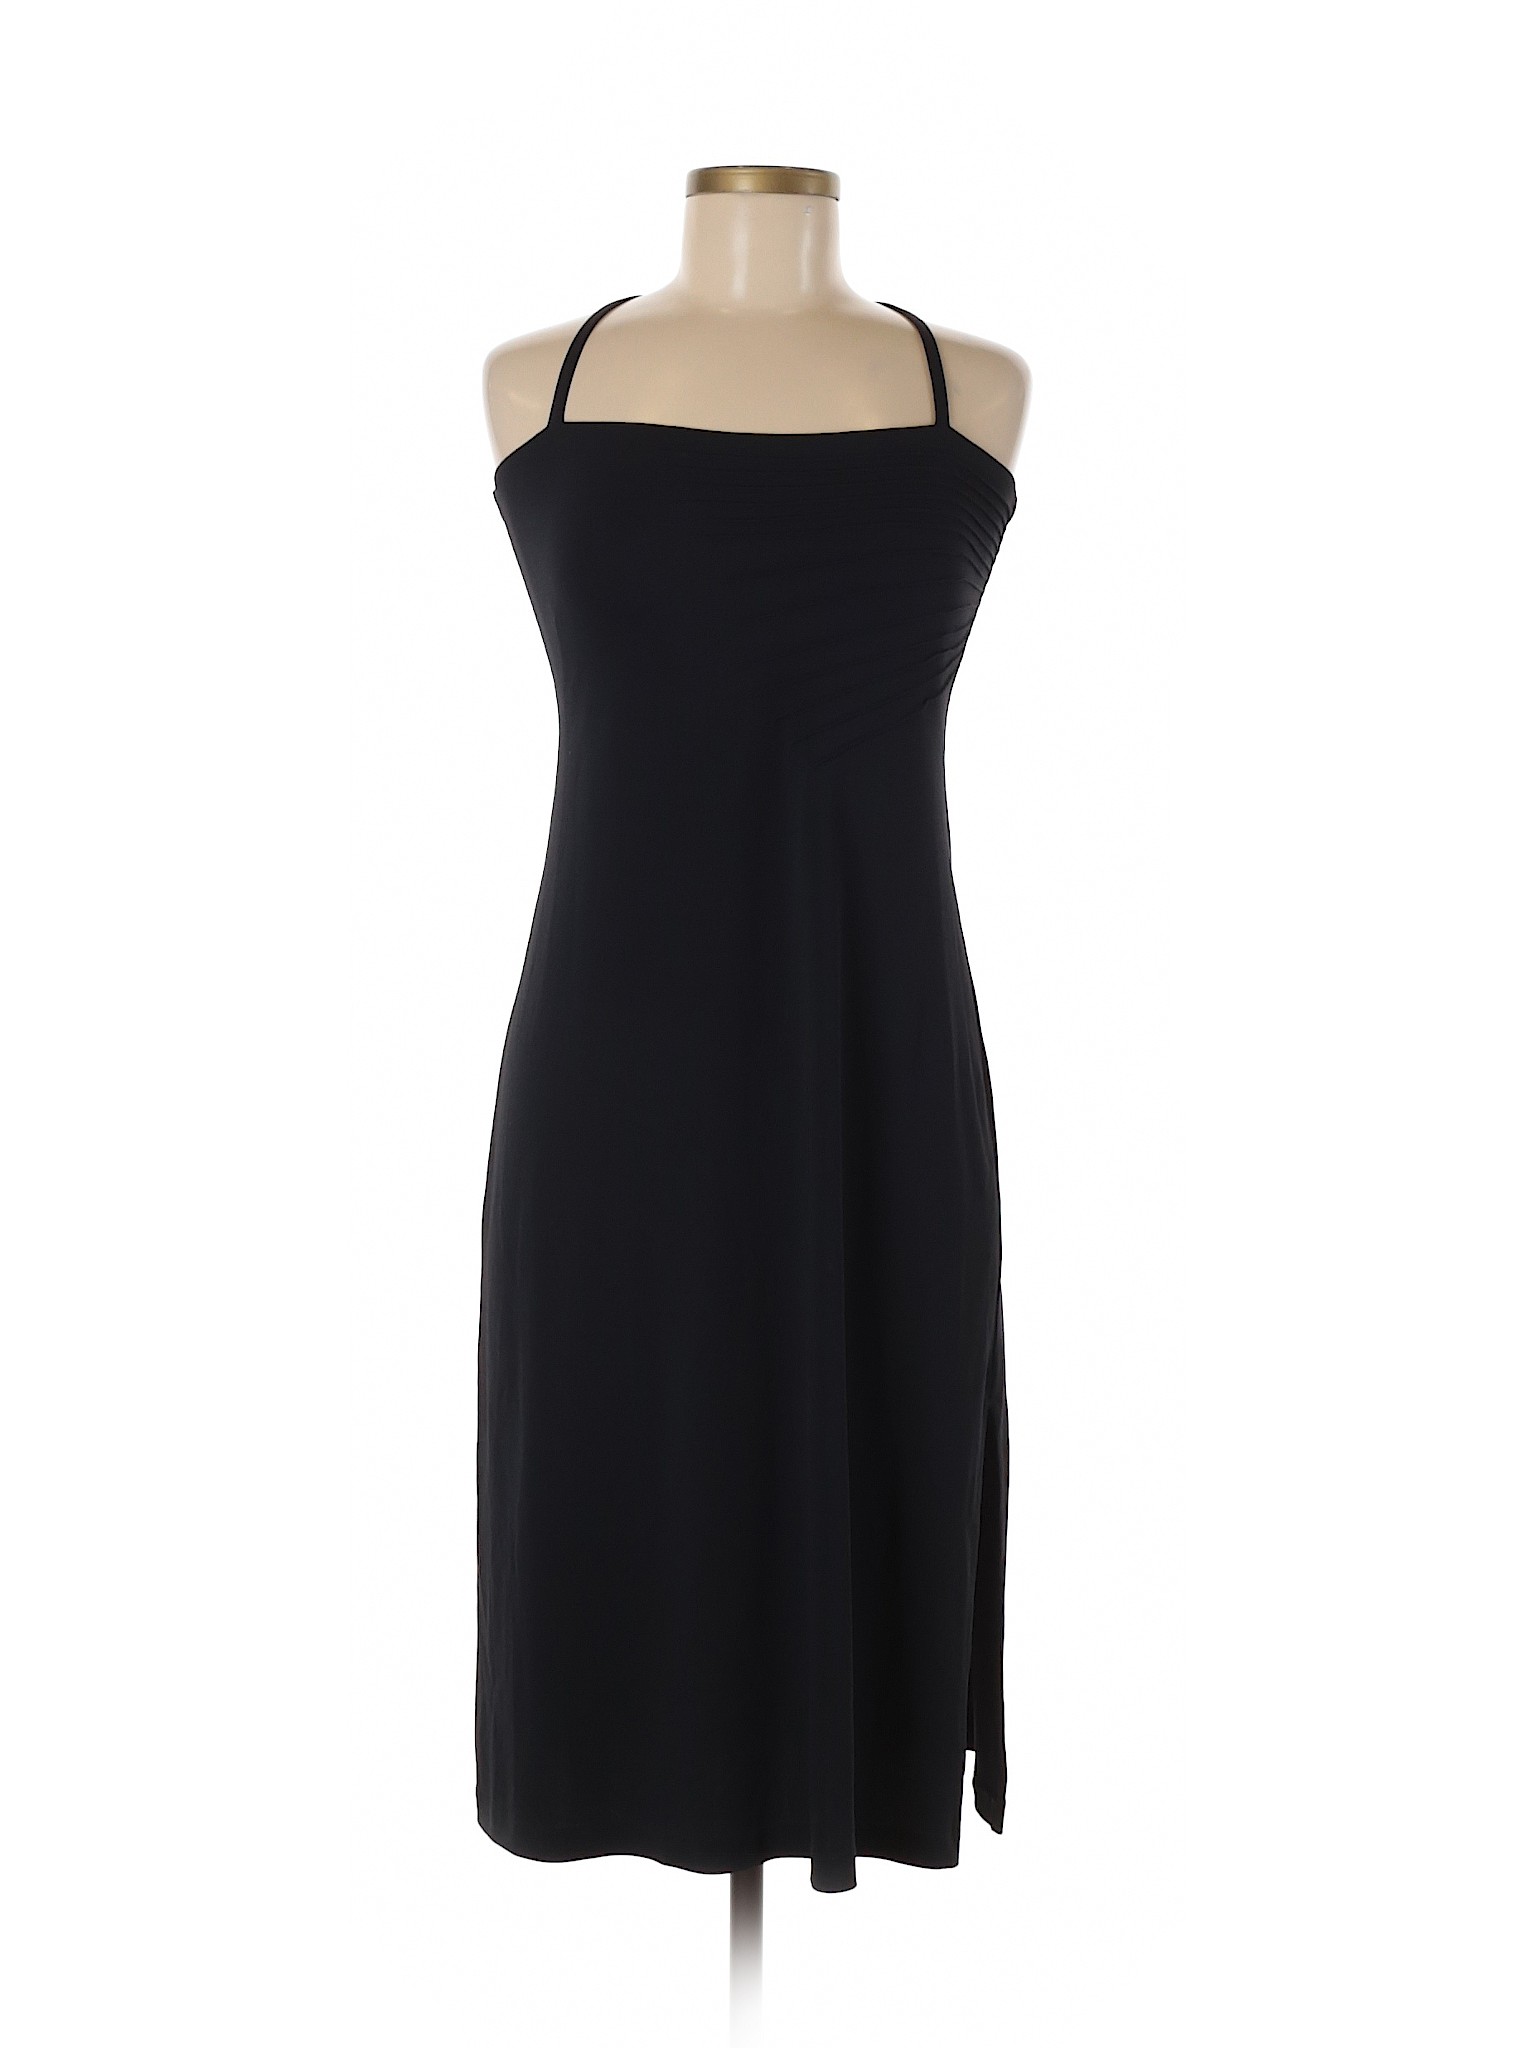 Armani Collezioni Women Black Cocktail Dress 8 | eBay